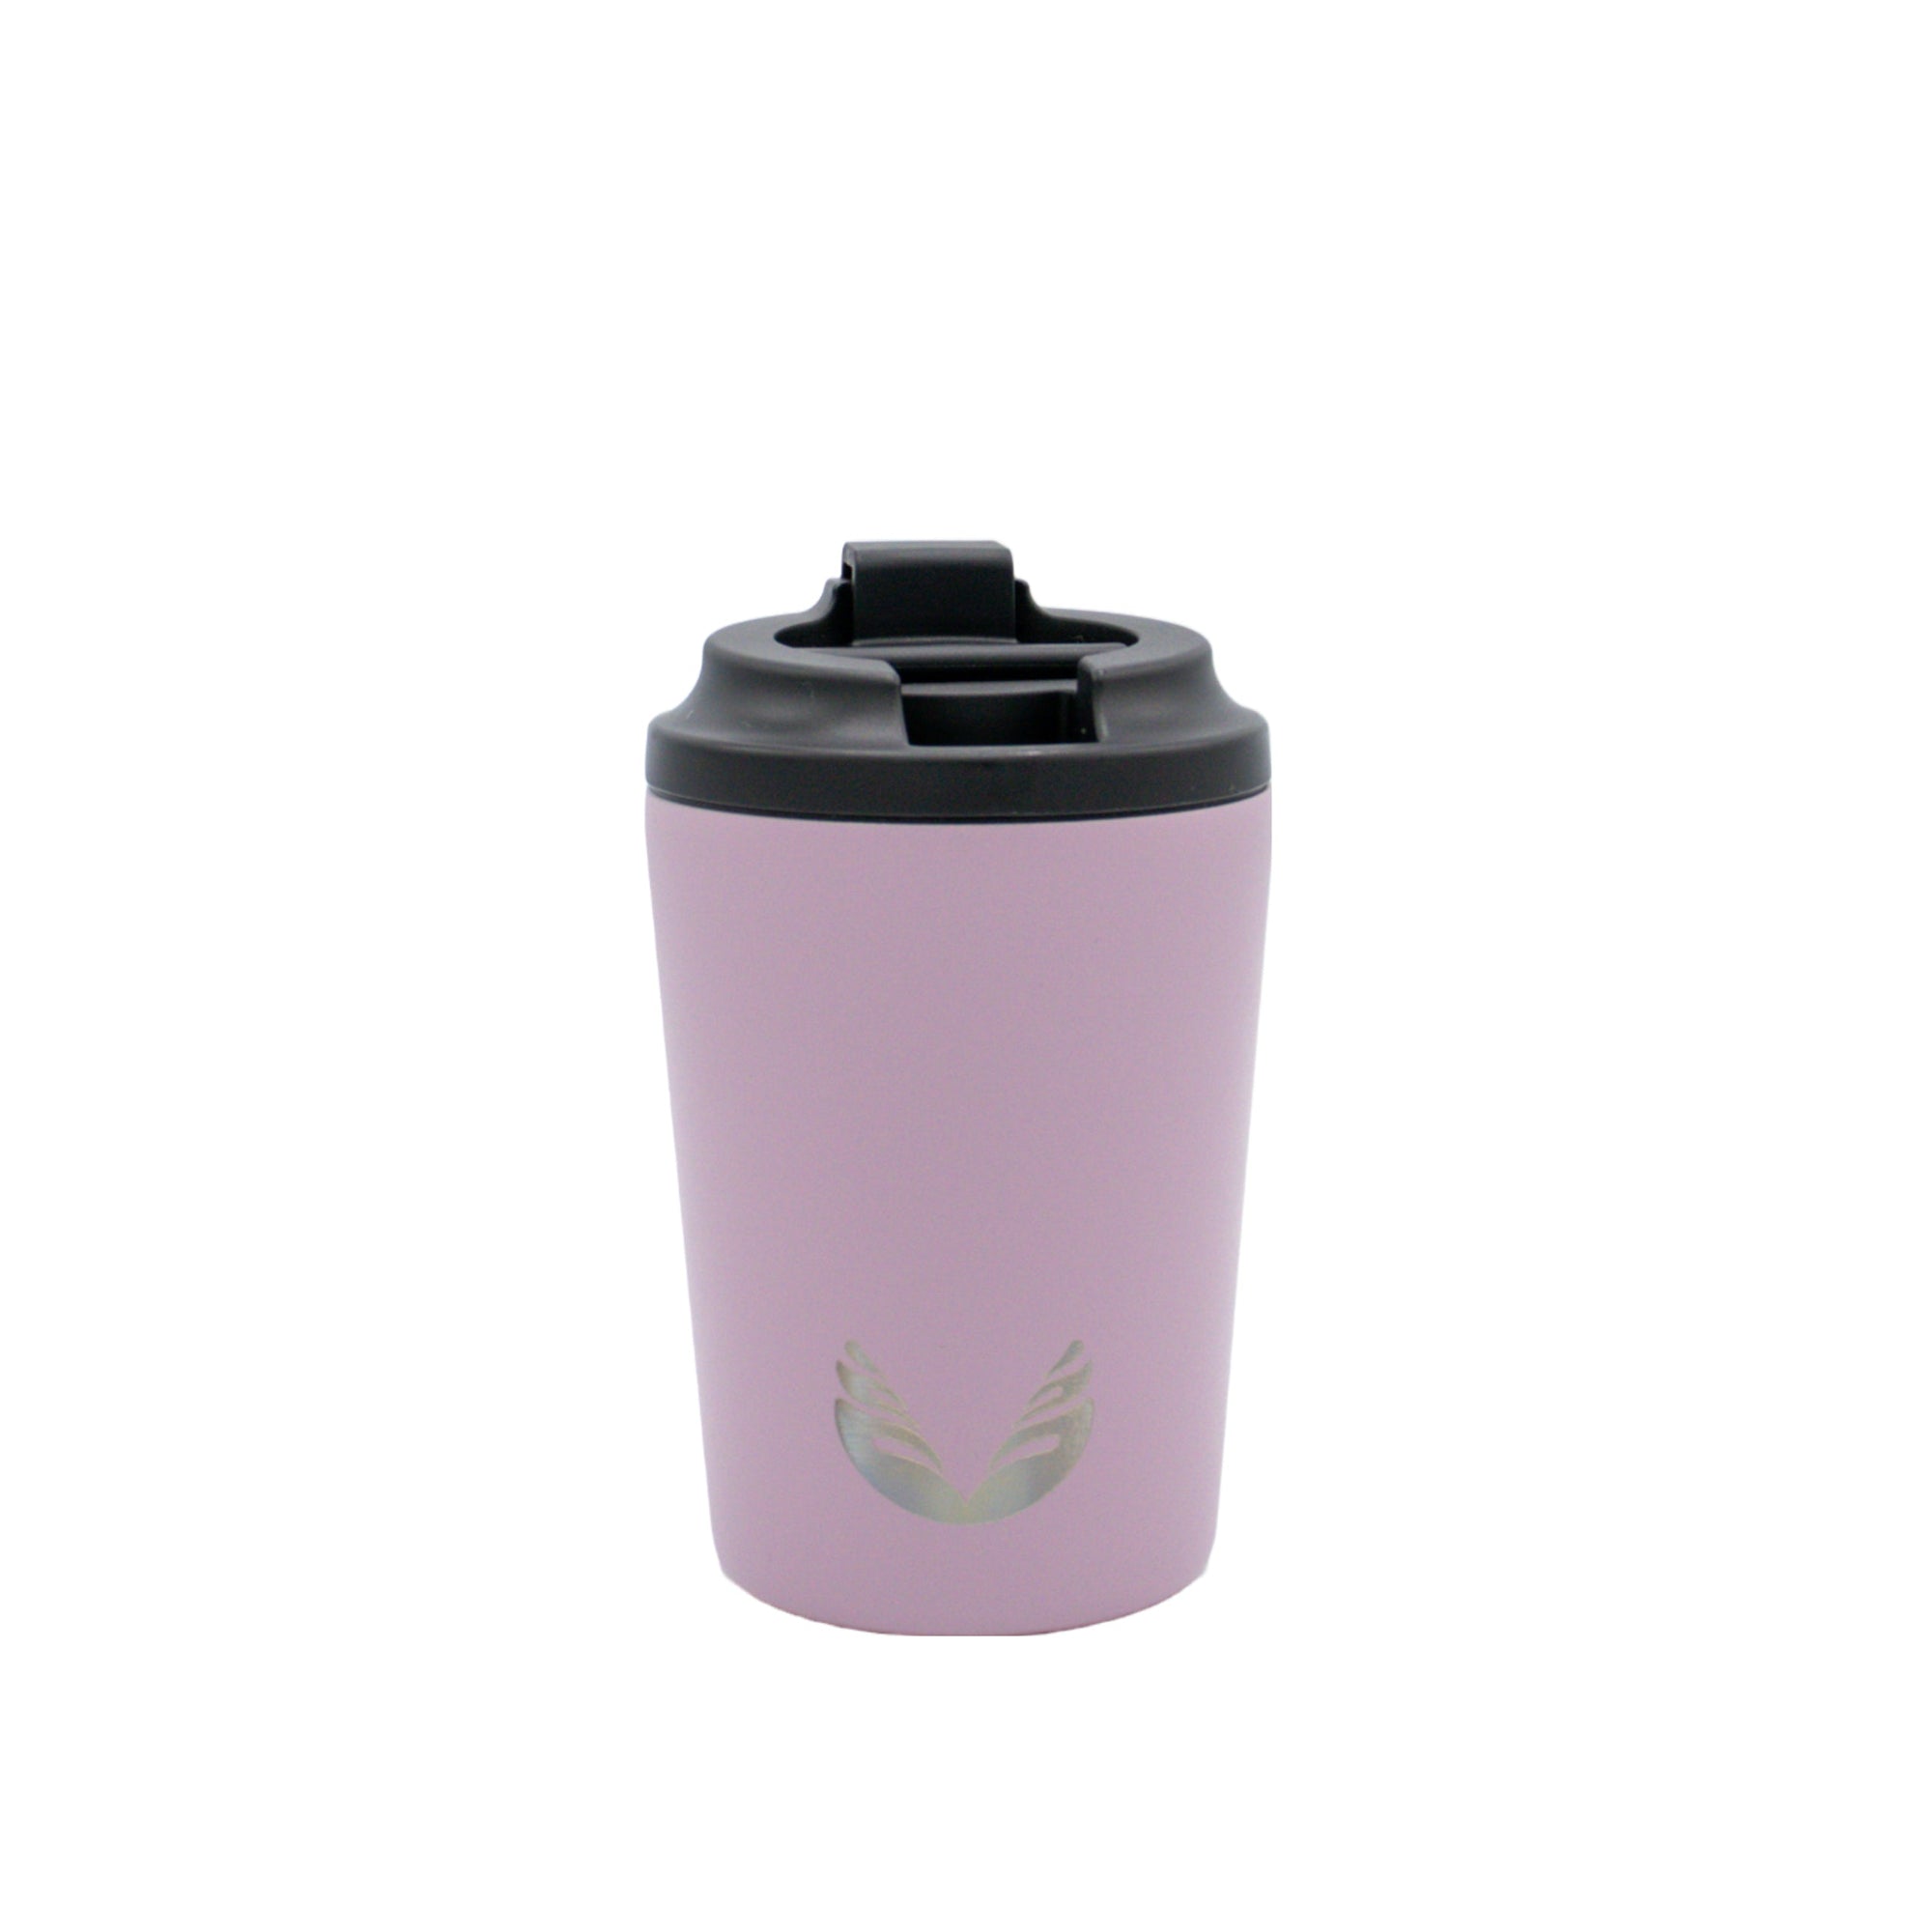 Fressko - Fressko Reusable Cafe Cup - Lilac